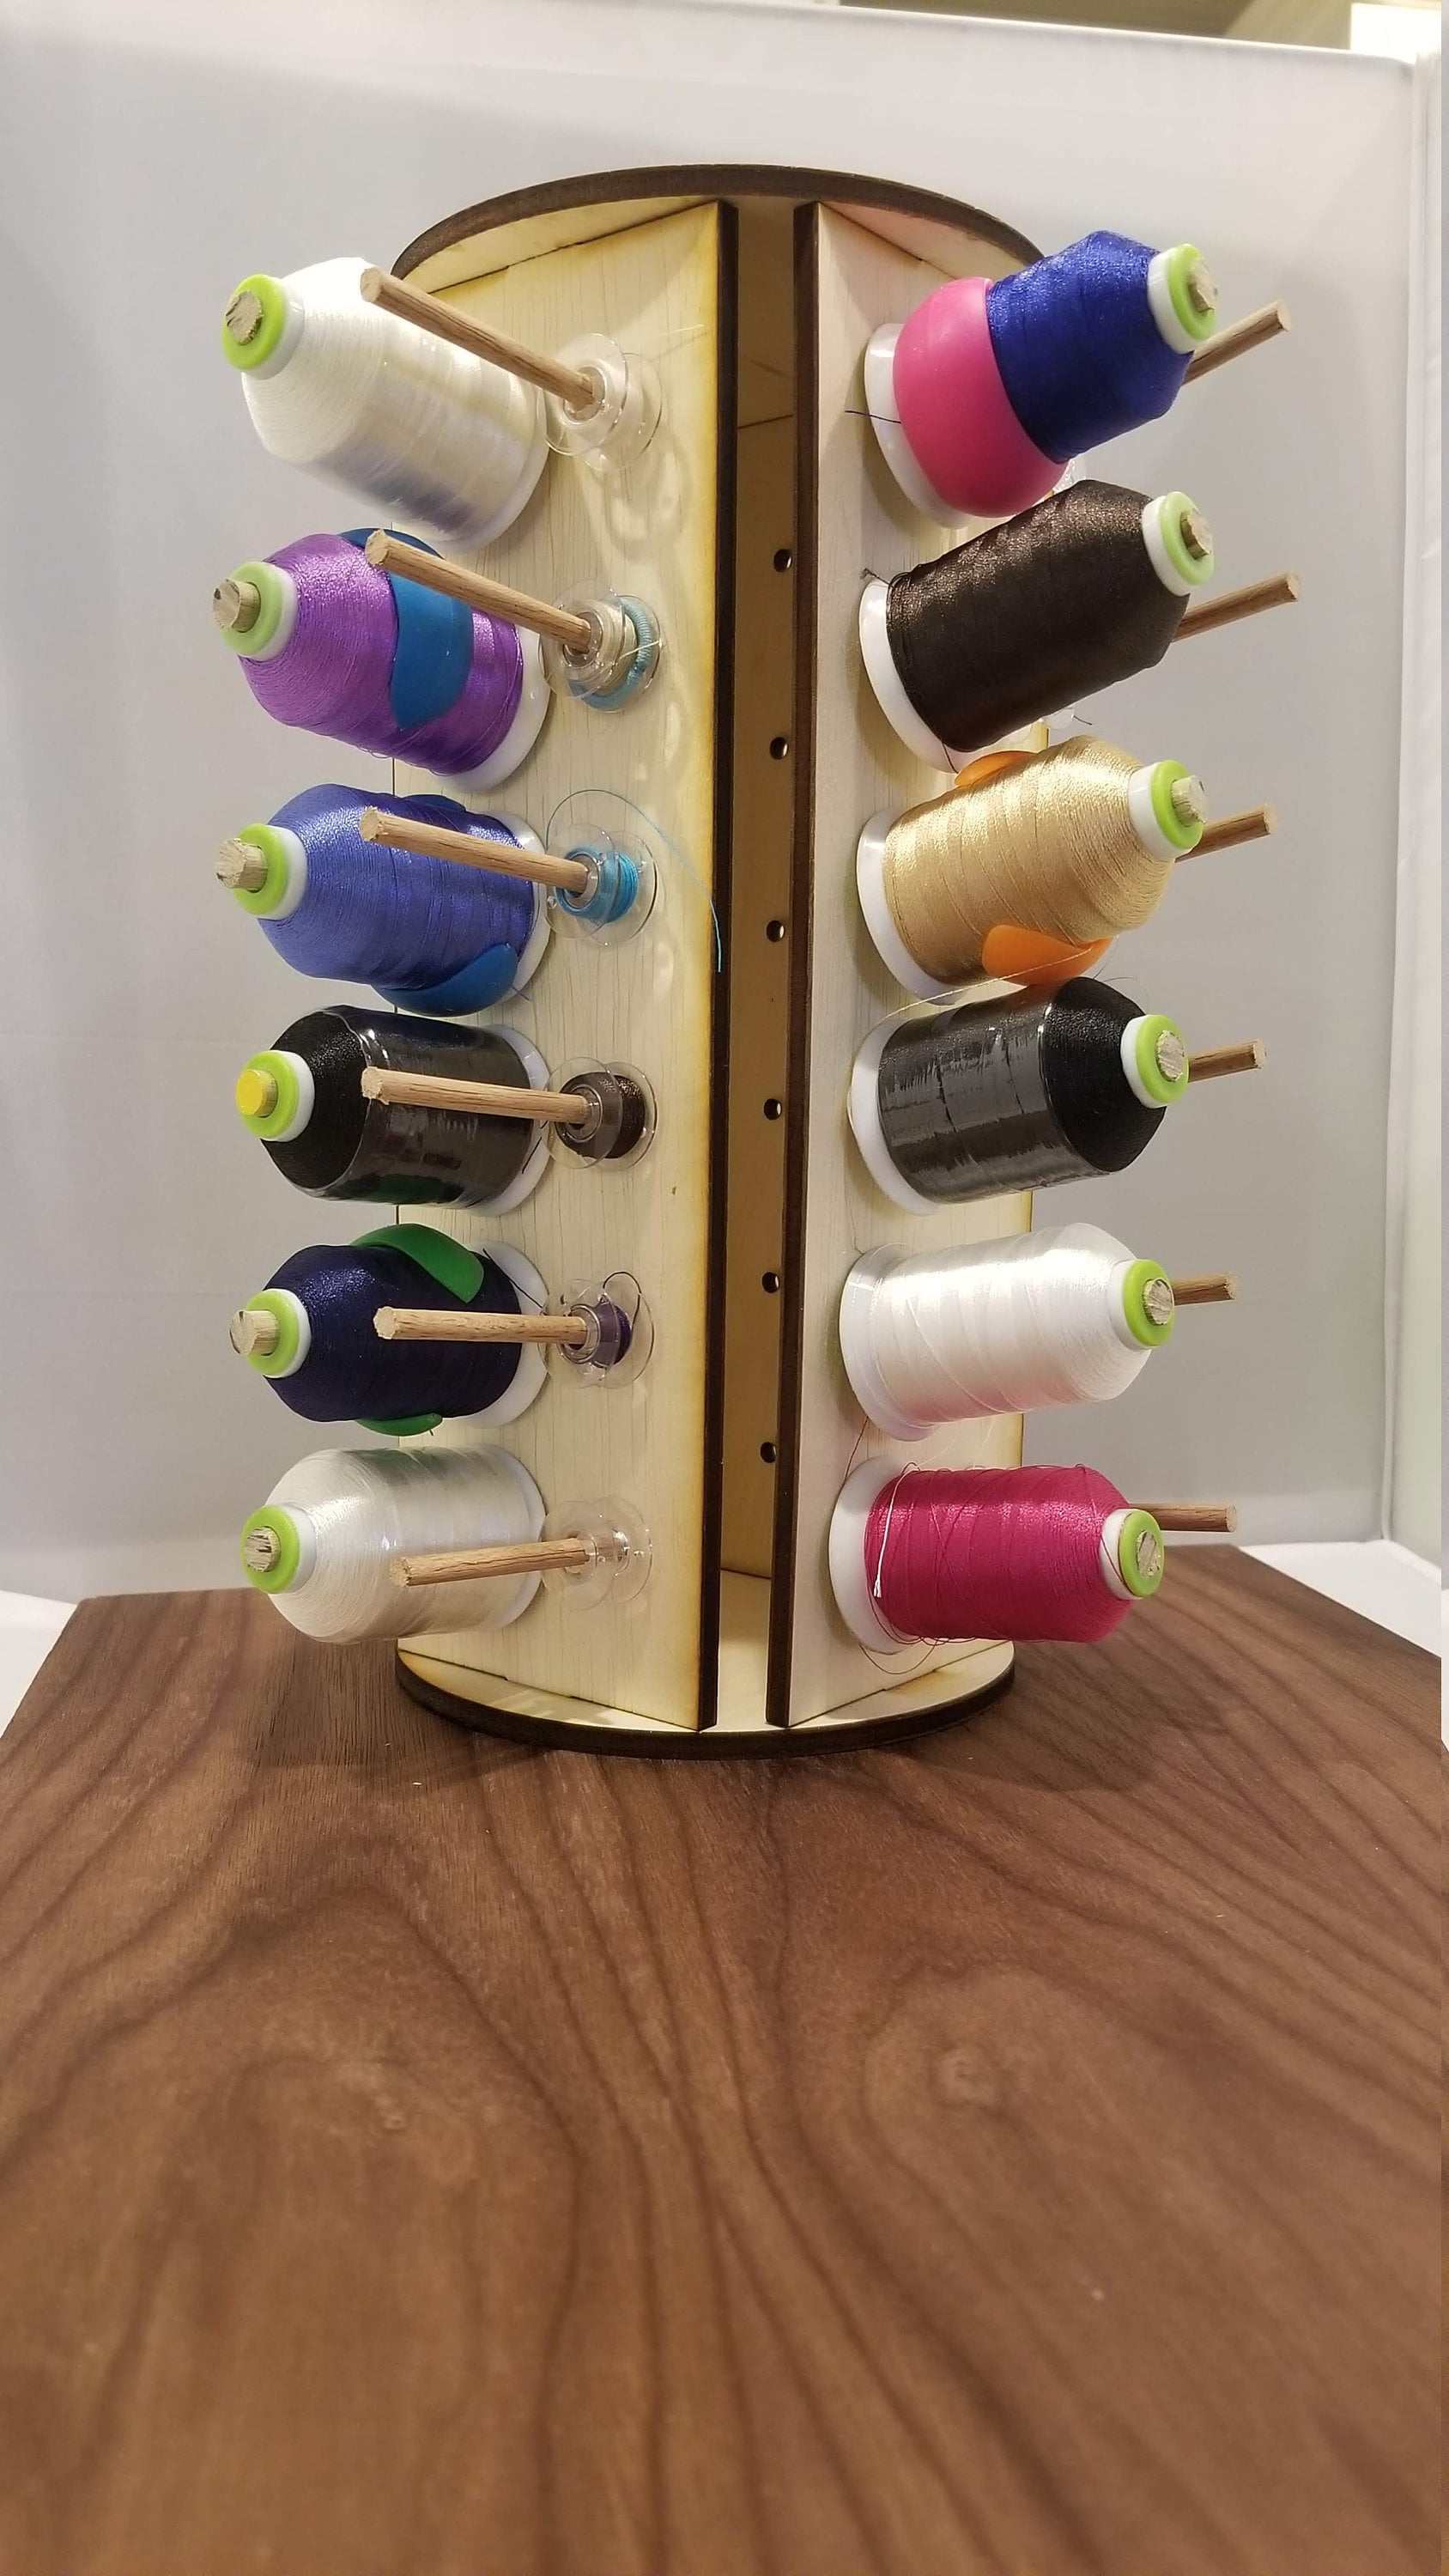 1950s-1960s Vintage Sewing/thread Box Green Thread Organizing Box